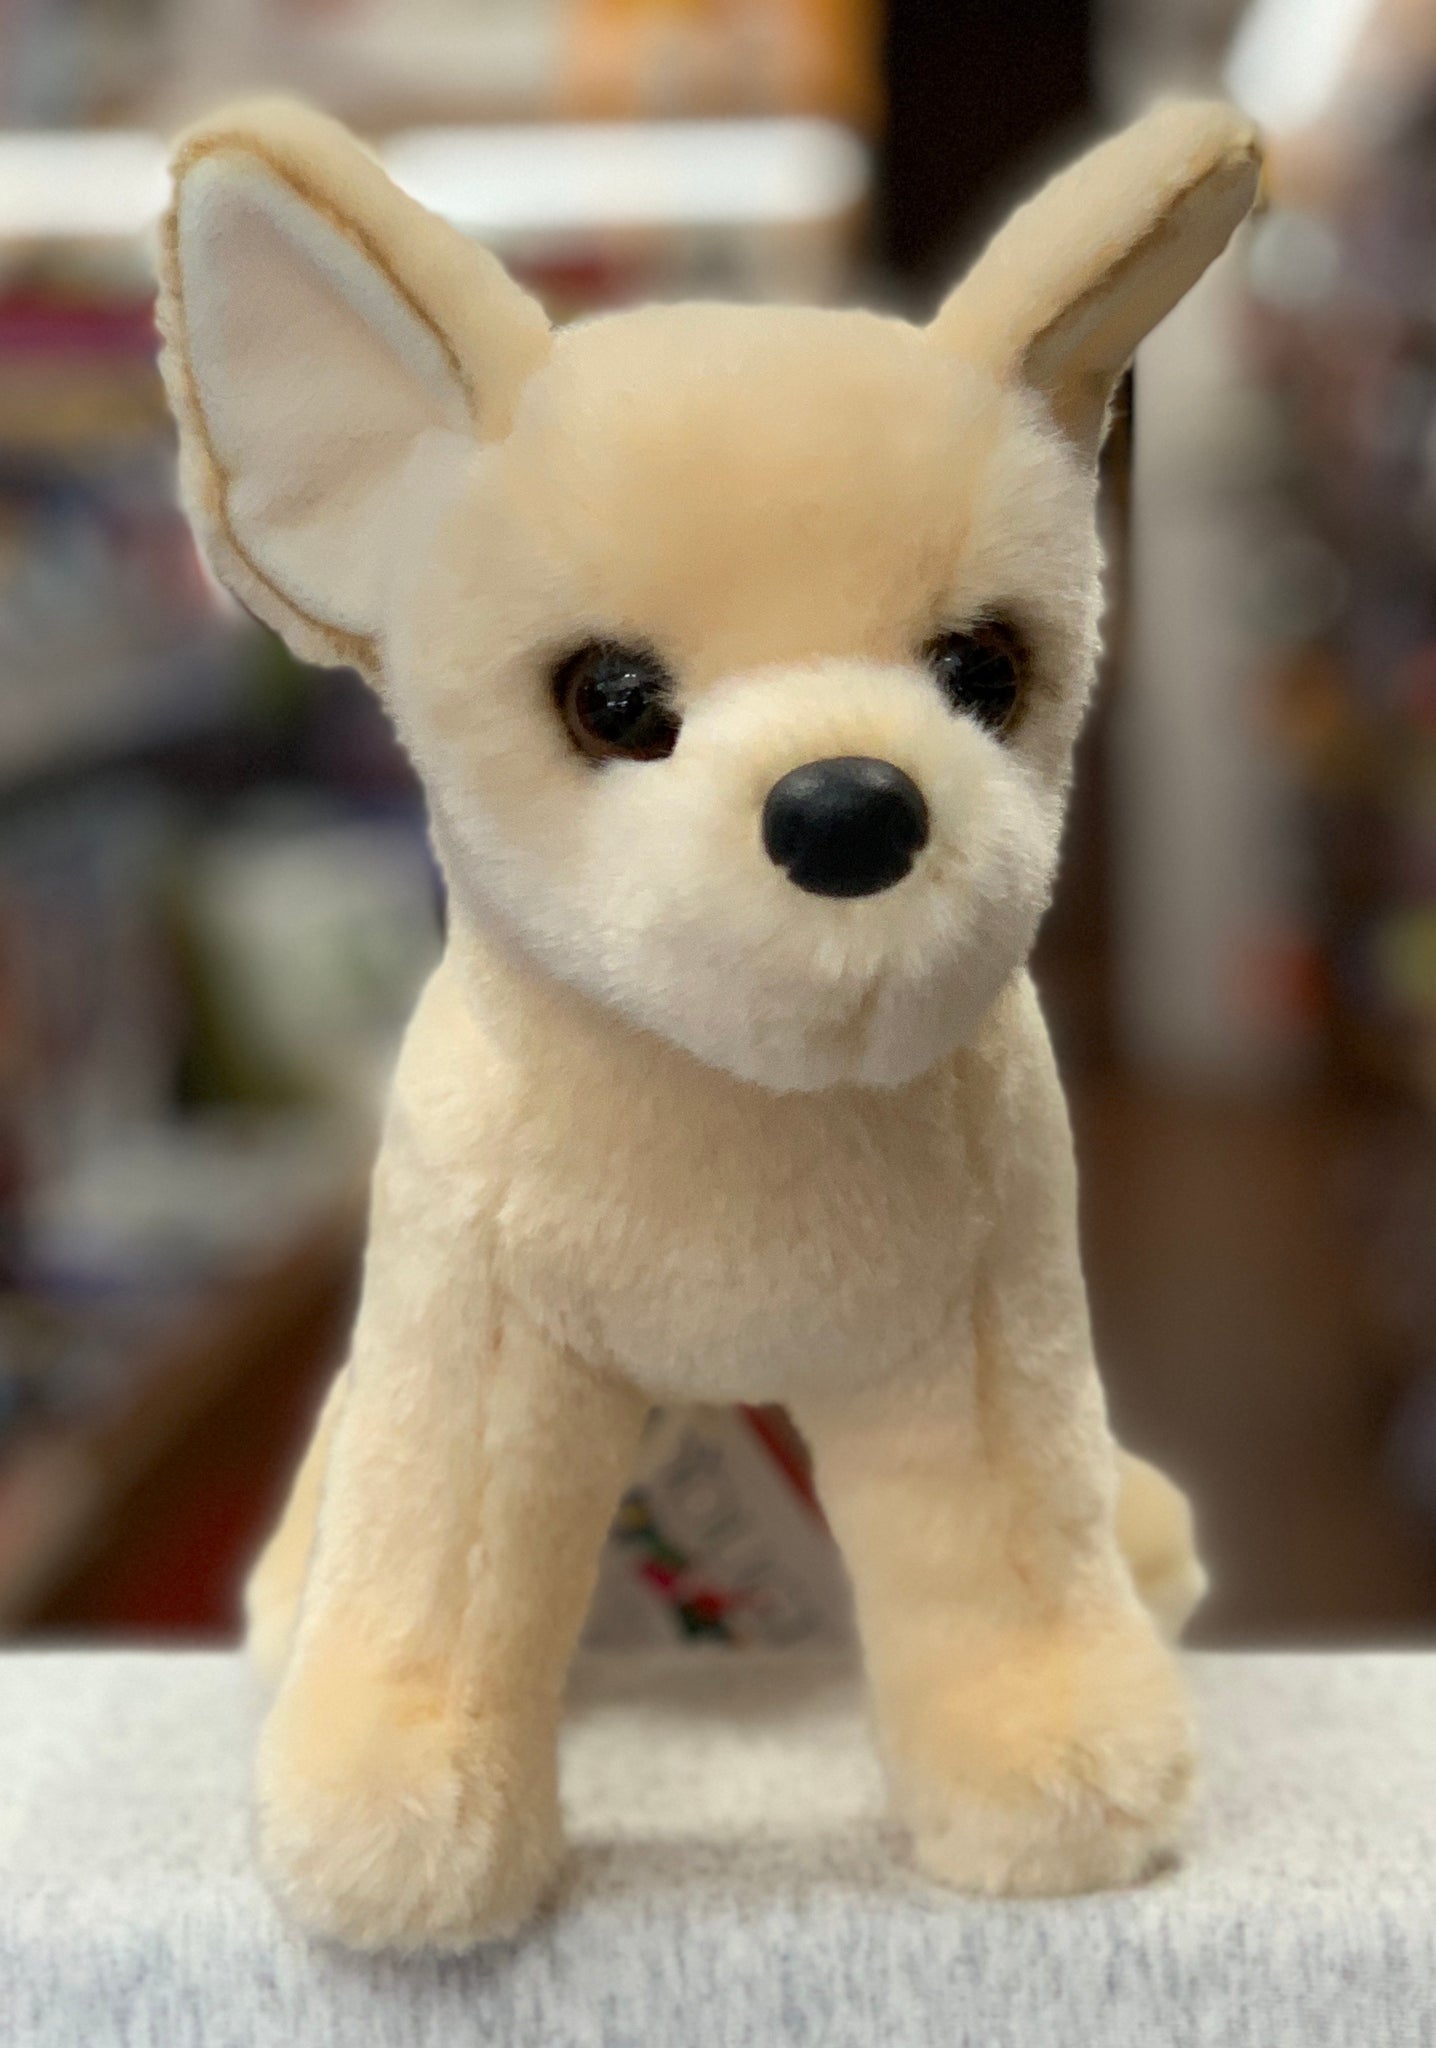 Mini Plush Chihuahua Toy